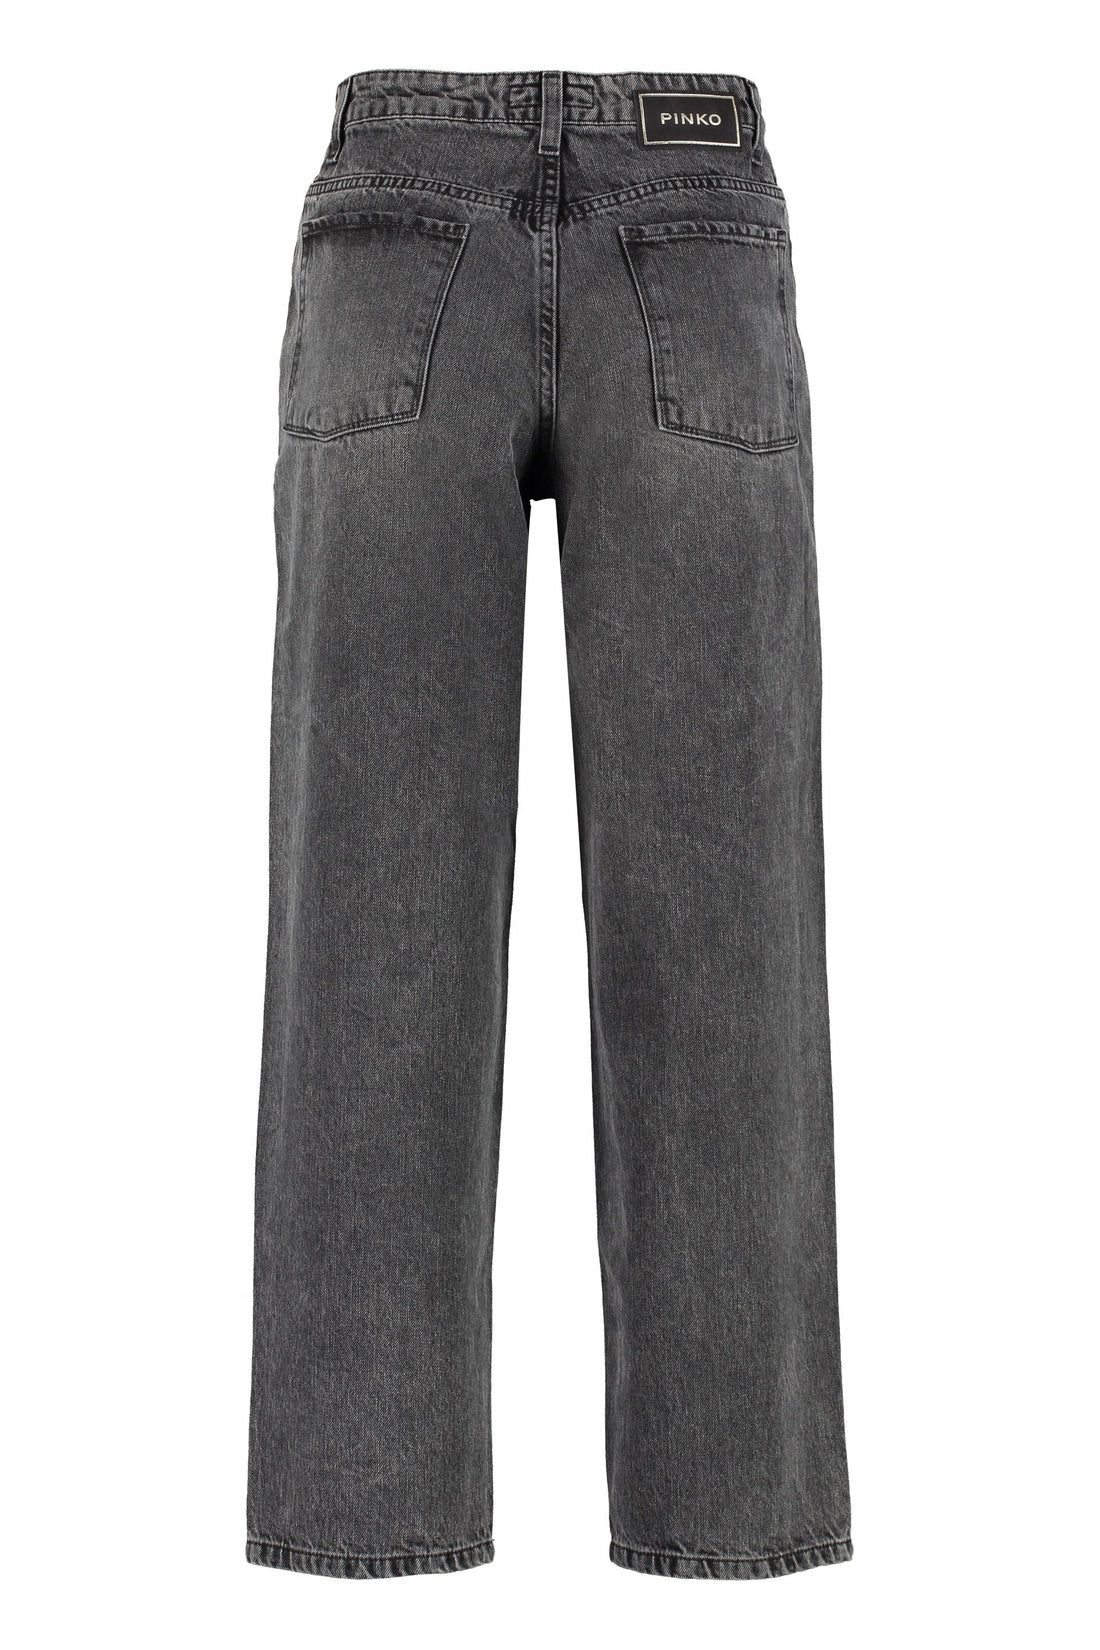 Pinko-OUTLET-SALE-Deja Vu 5-pocket jeans-ARCHIVIST